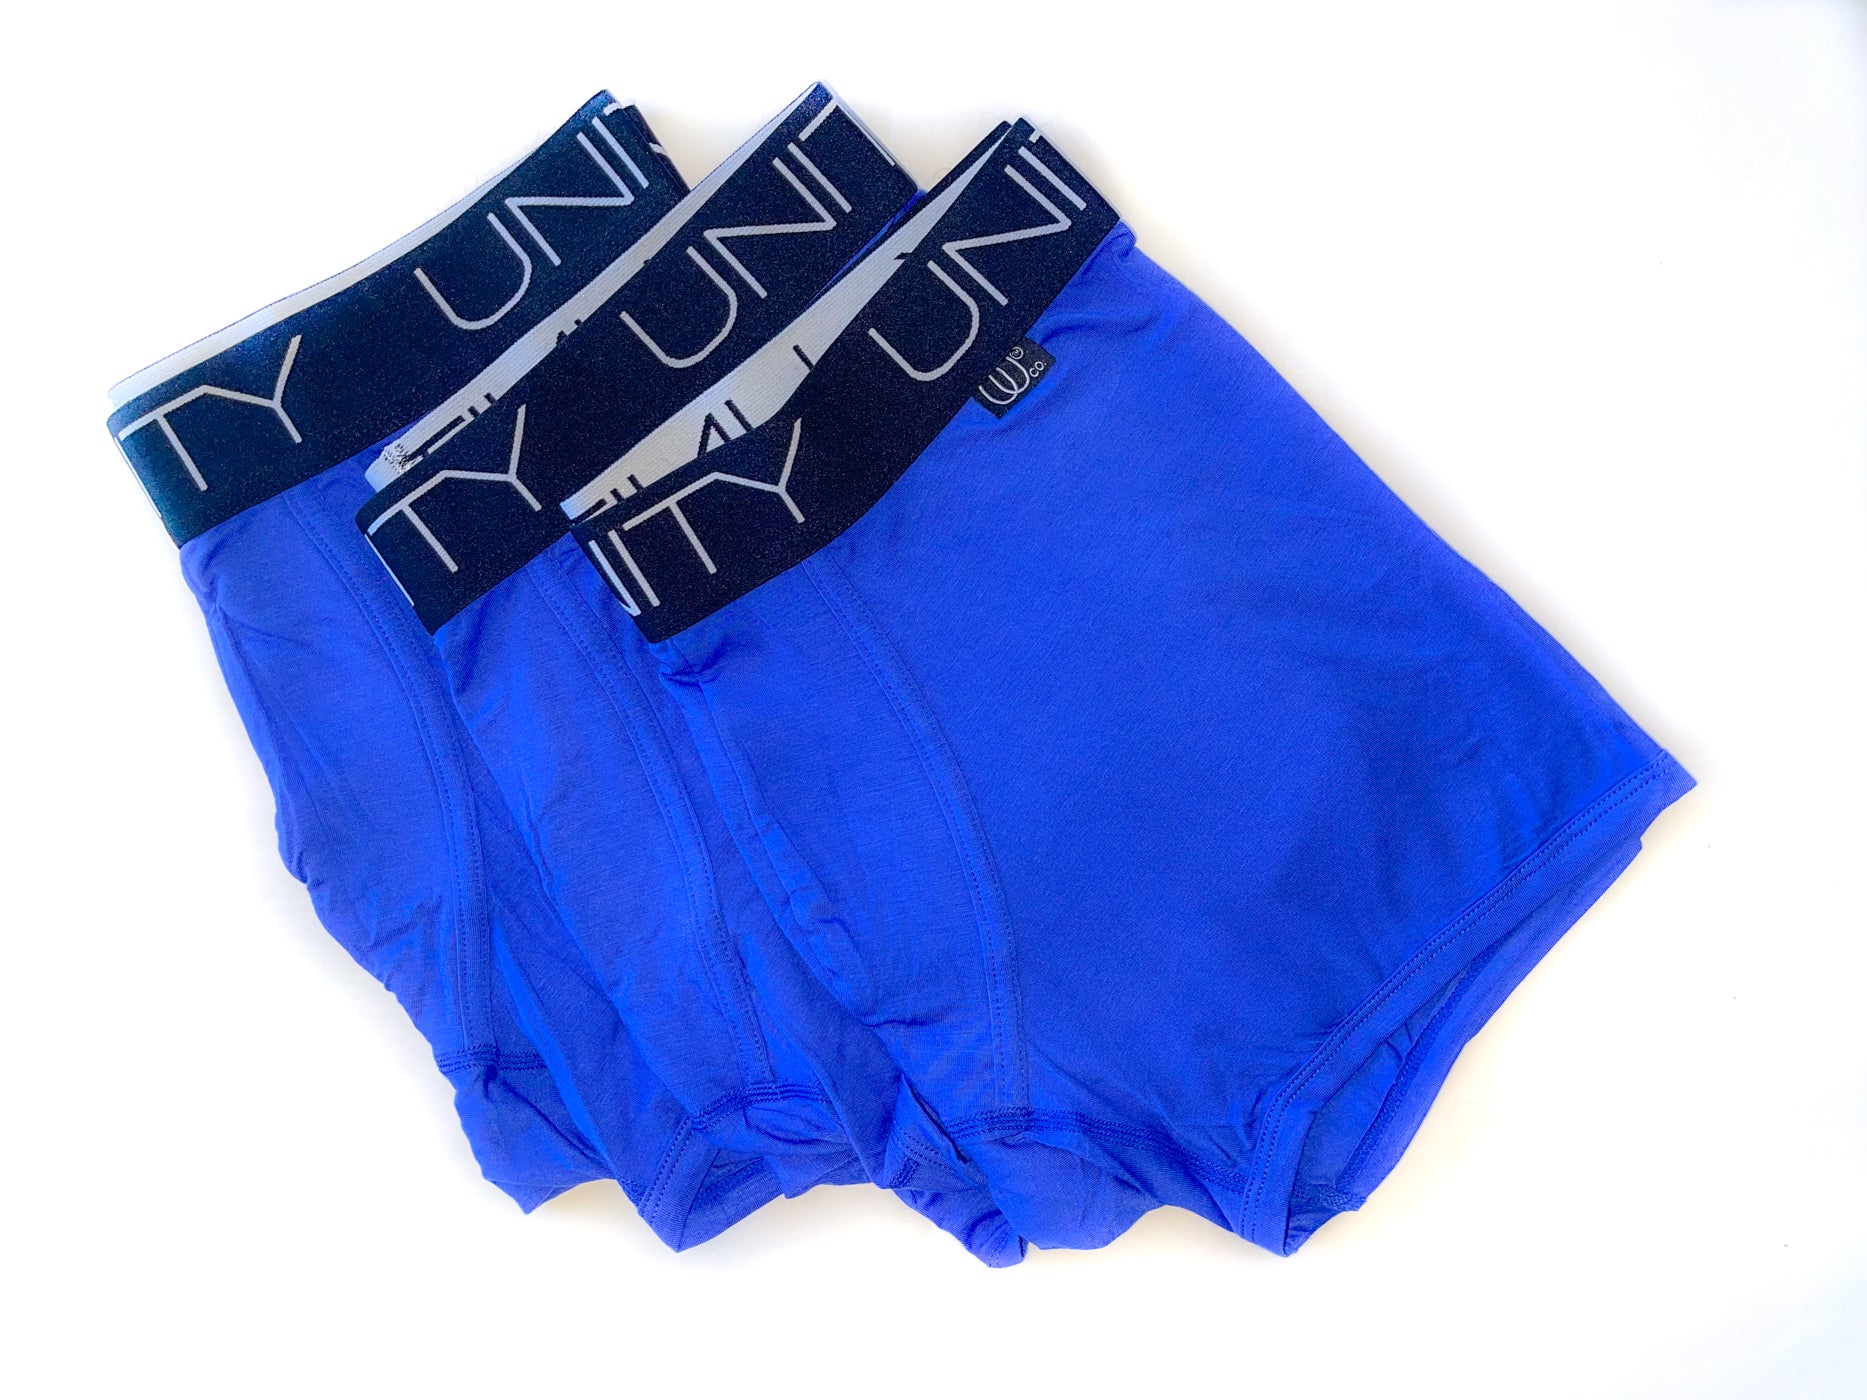 Soft jockey underwear for men sale For Comfort 